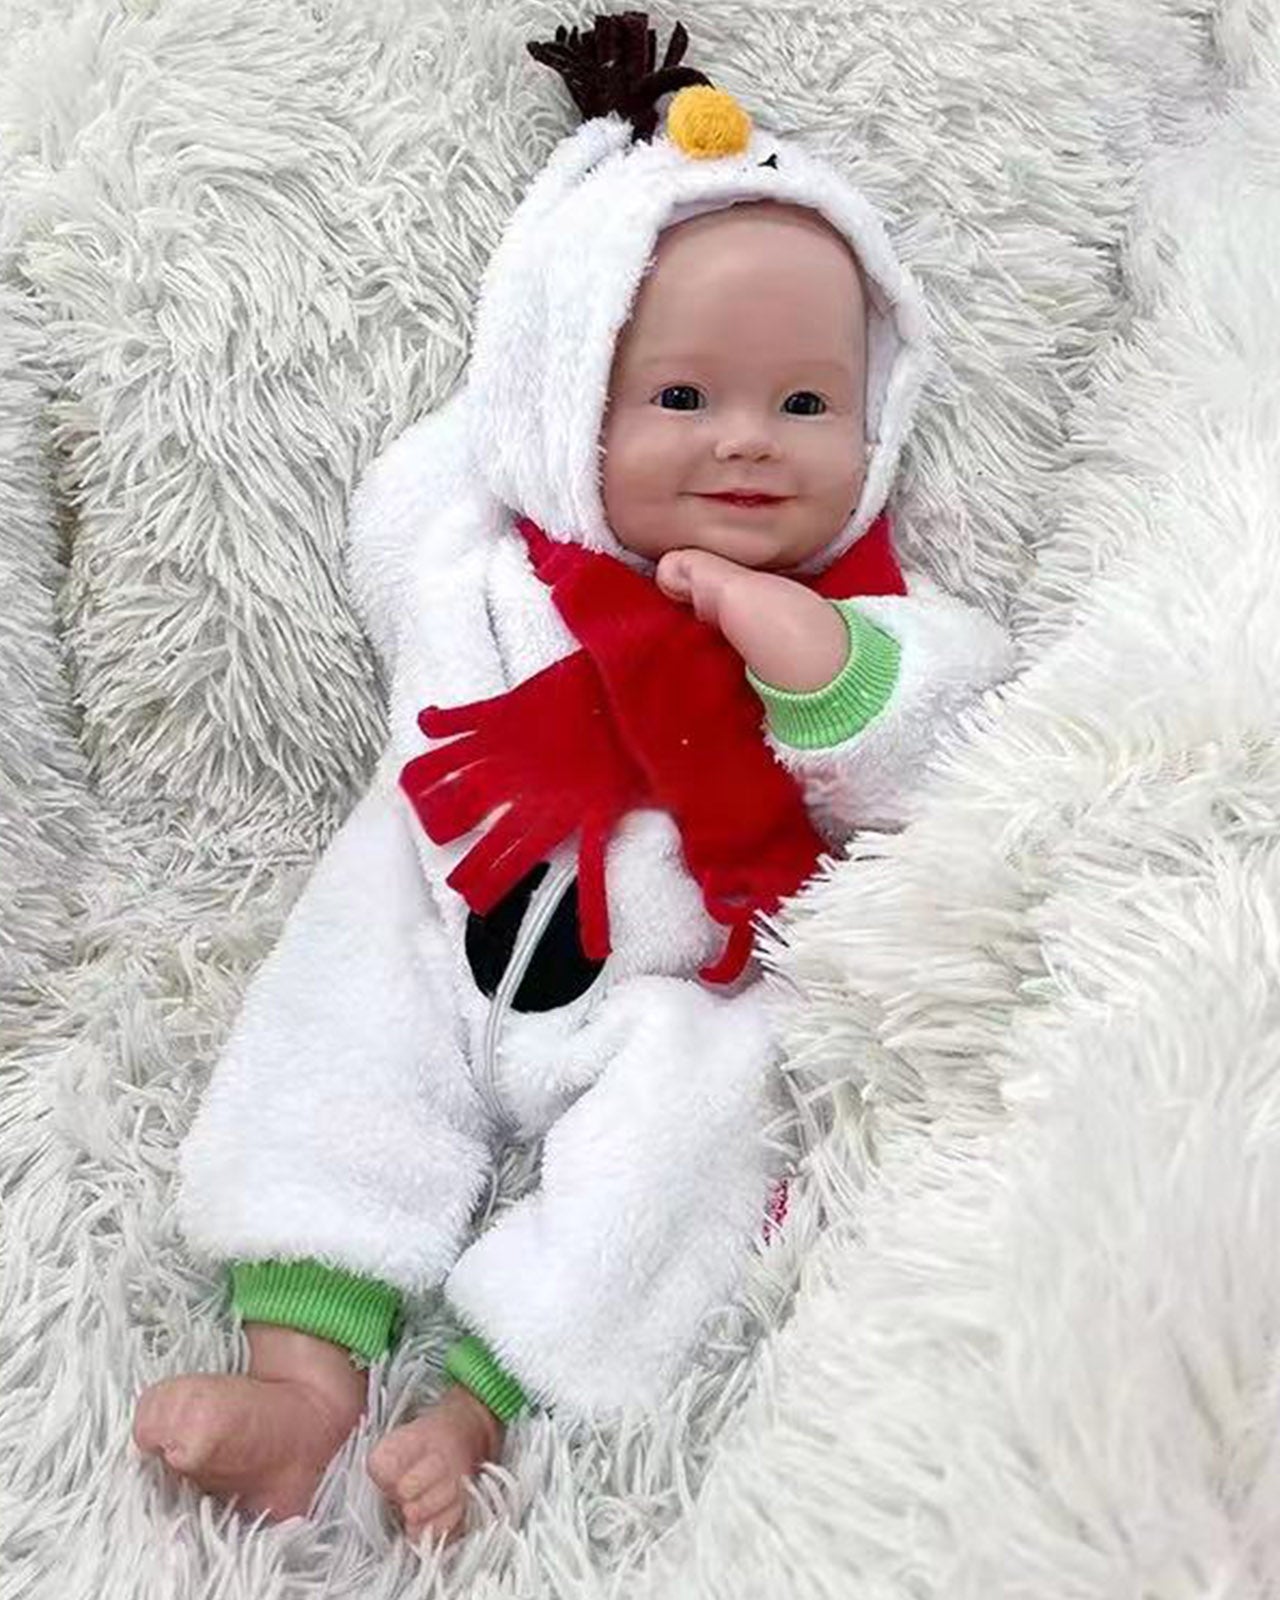 Brian - 18" Full Silicone Reborn Baby Dolls Soft Chubby Newborn Boy with Handmade Lifelike Painted